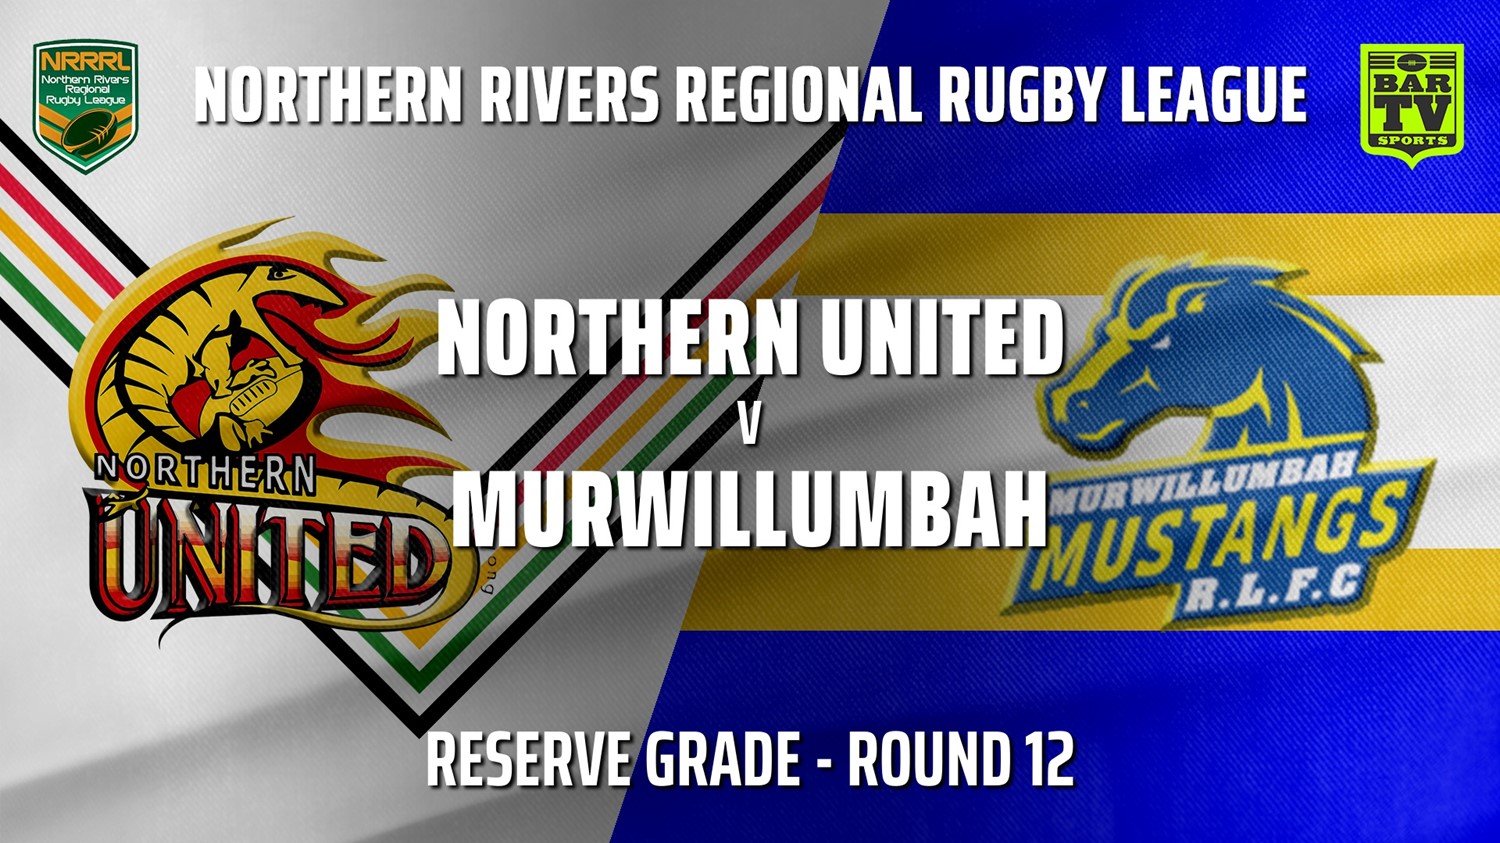 210724-Northern Rivers Round 12 - Reserve Grade - Northern United v Murwillumbah Mustangs Slate Image